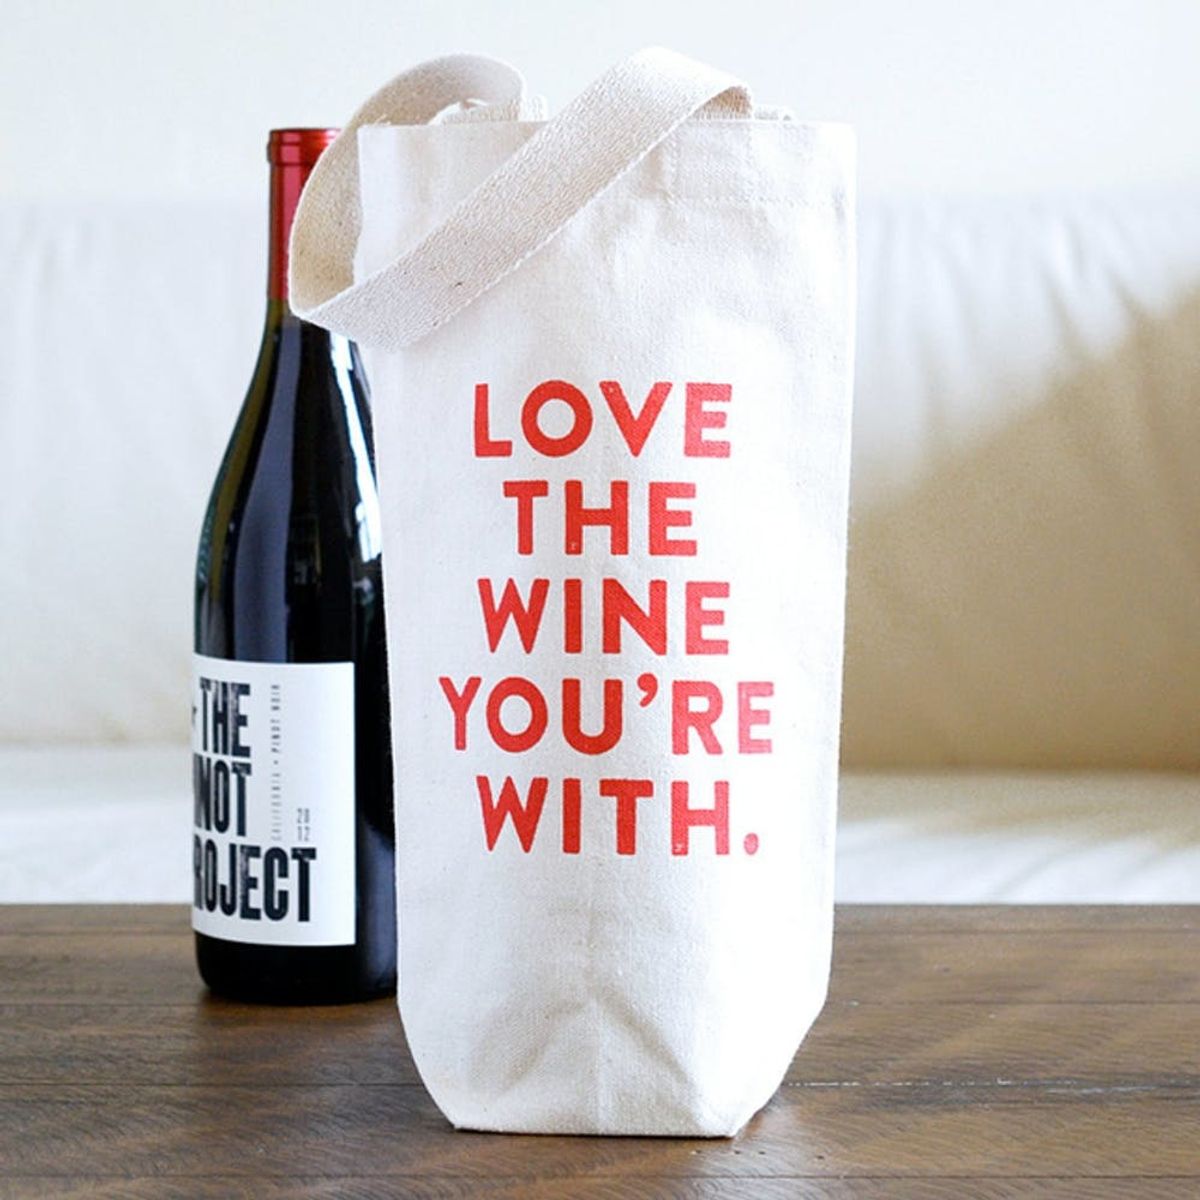 14 National Wine Day Essentials Every Wino Needs